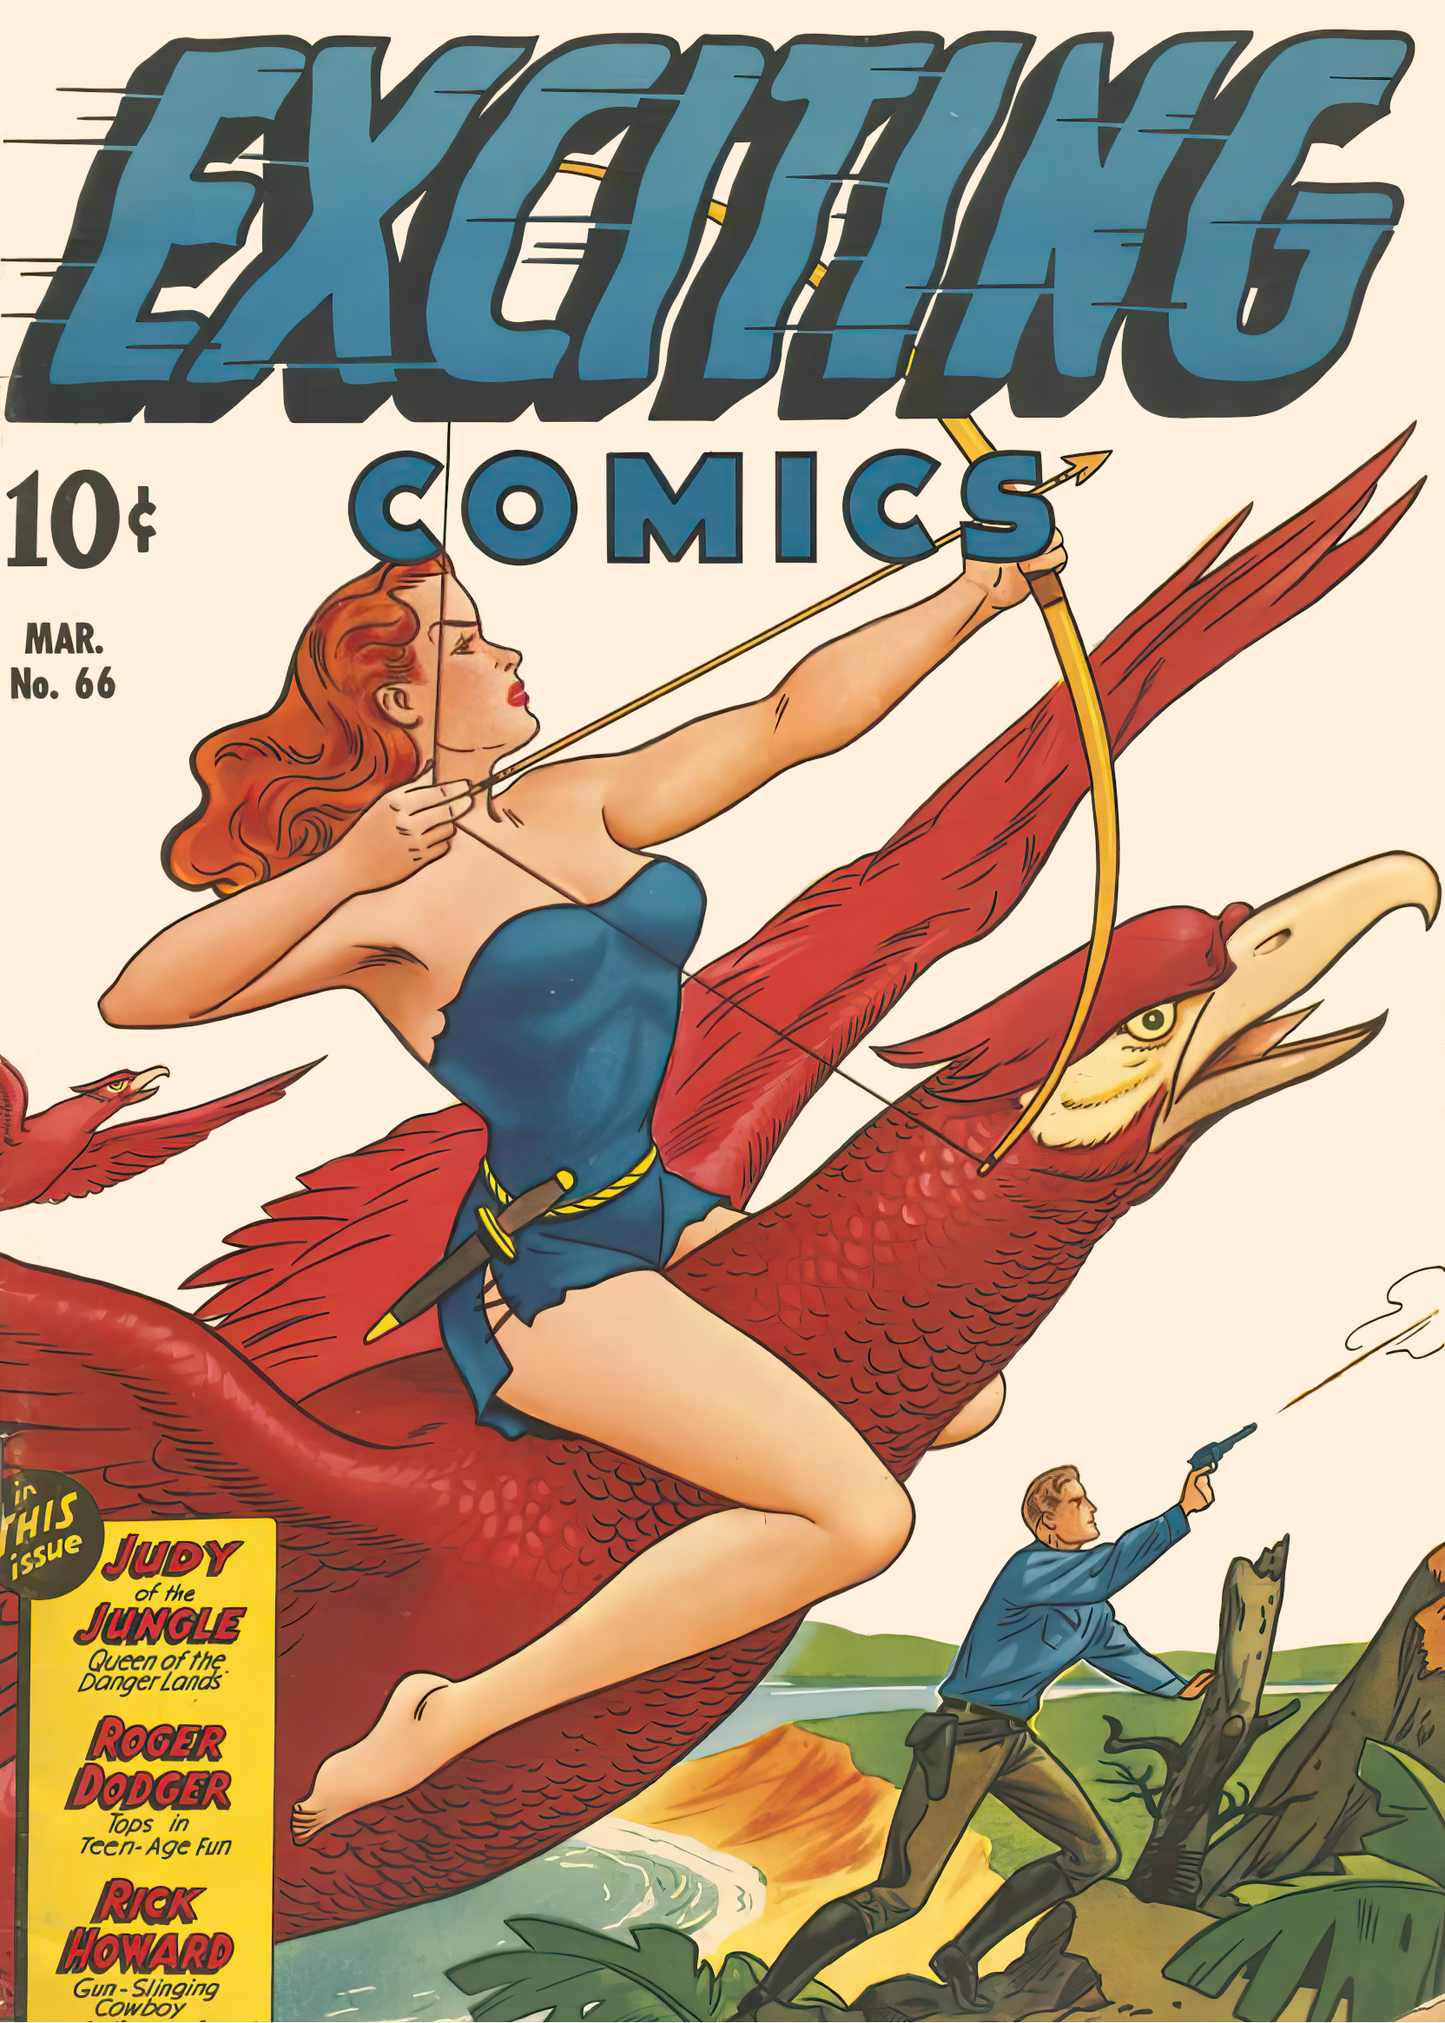 #1052 Exciting Comics #66